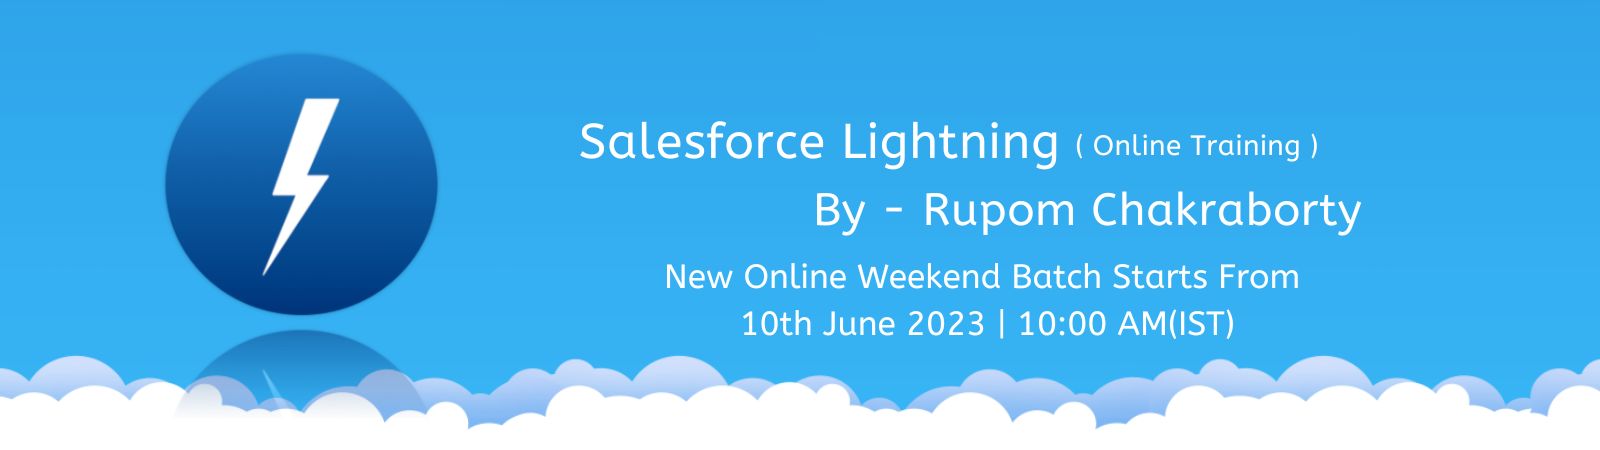 salesforce-lightning